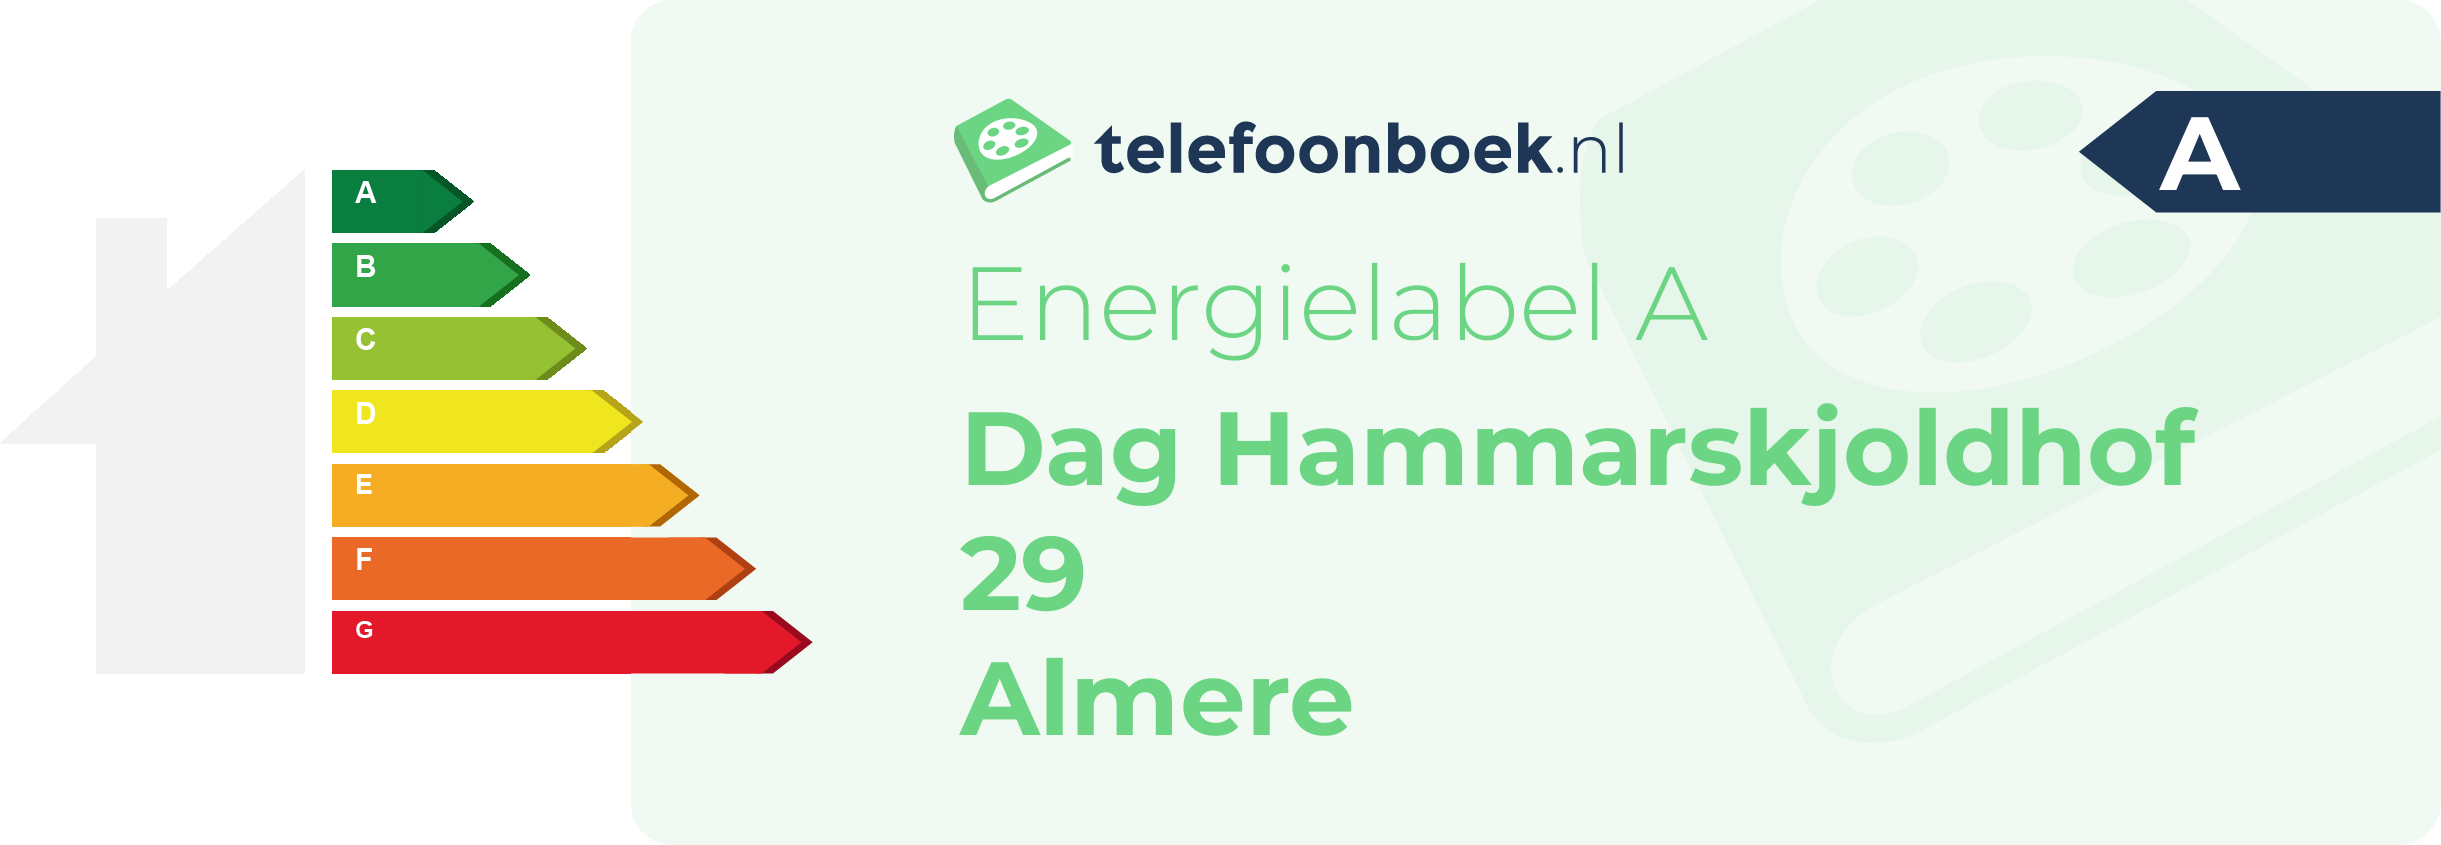 Energielabel Dag Hammarskjoldhof 29 Almere